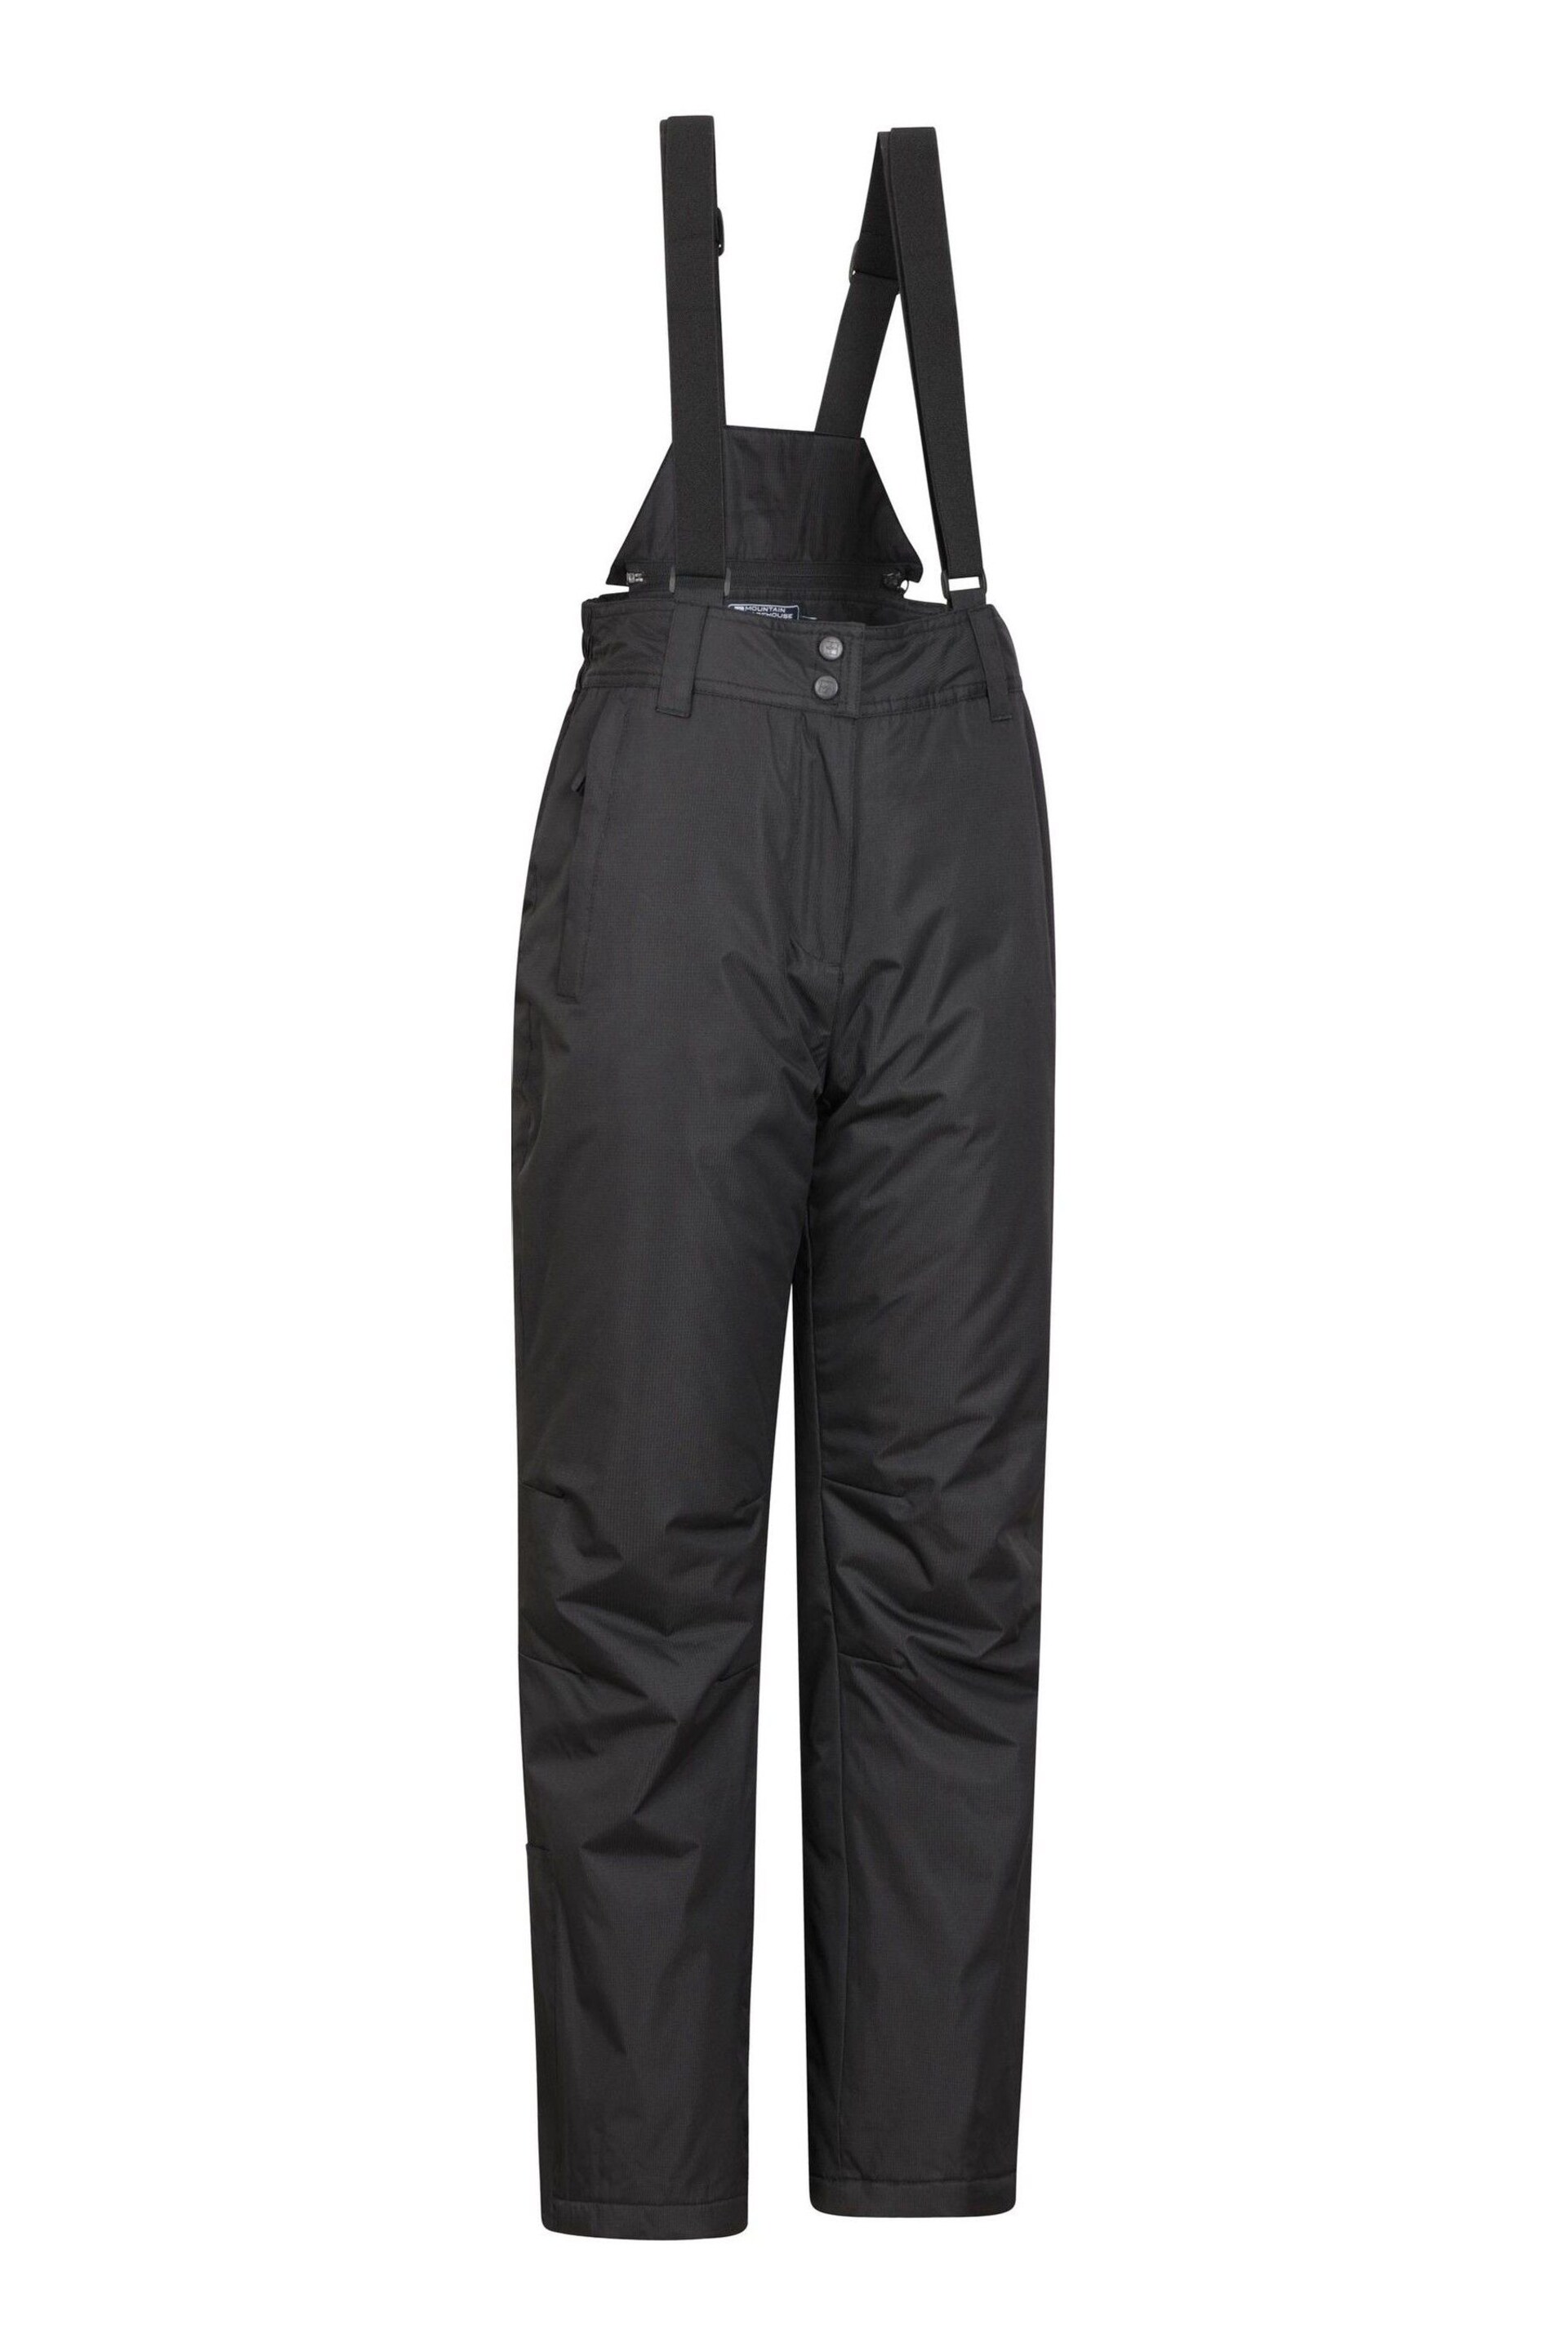 Mountain Warehouse Black Womens Moon Ski Trousers - Image 2 of 5